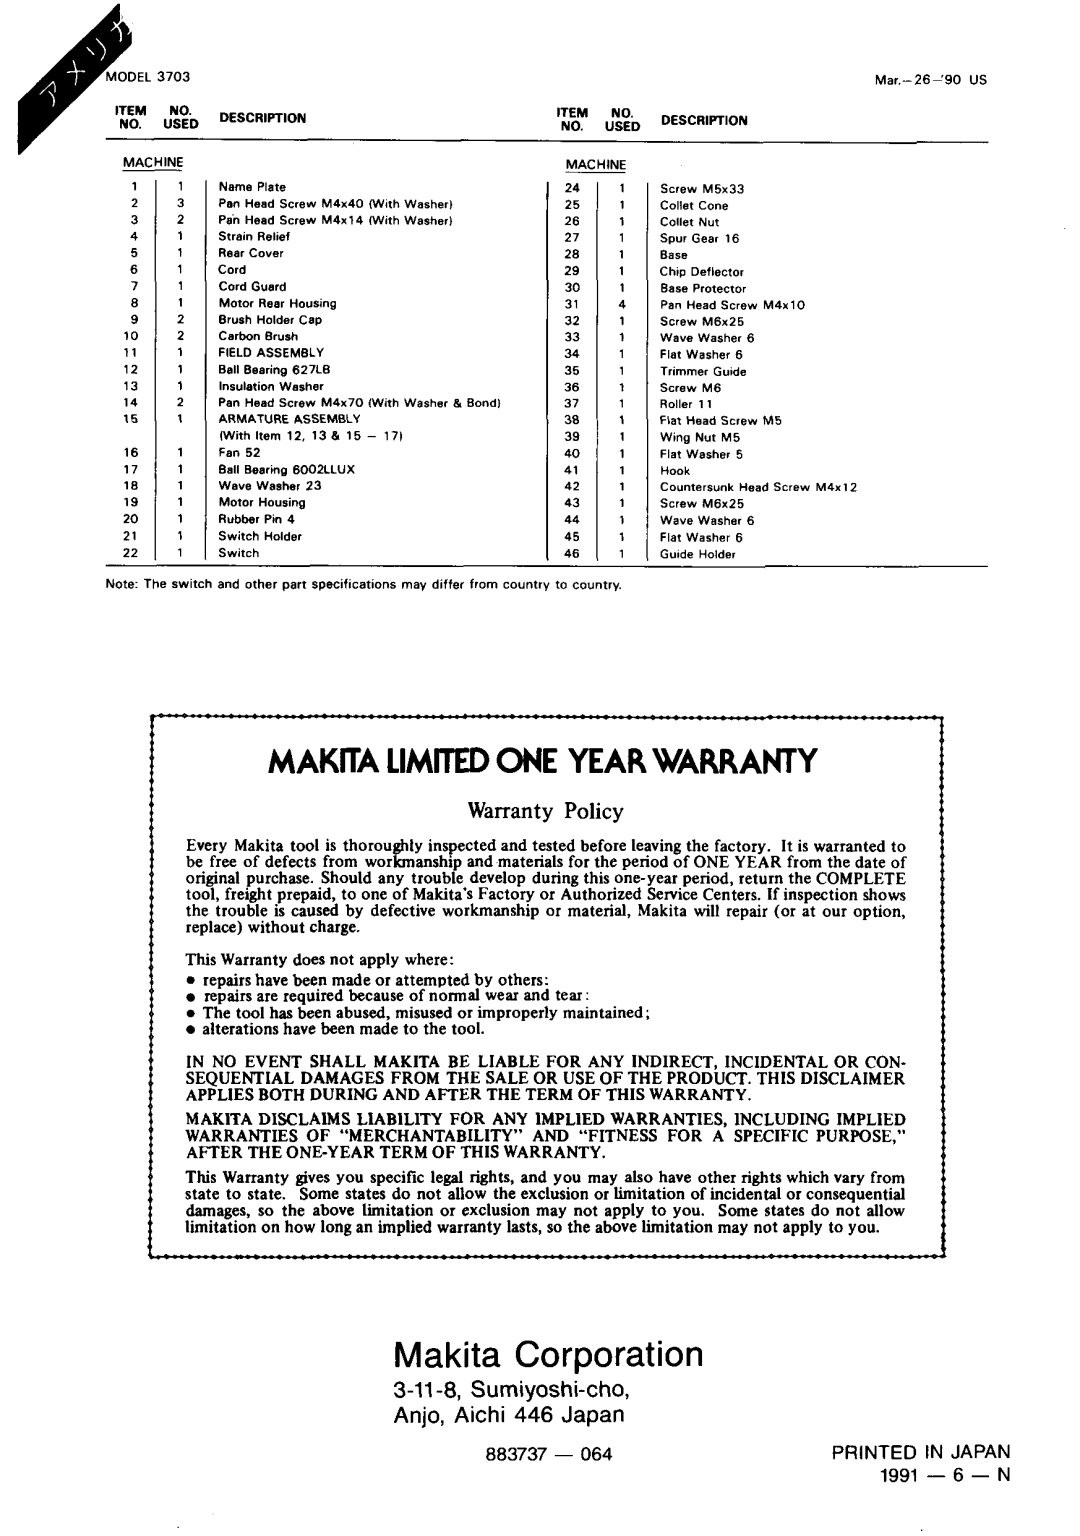 Makita 3703 Makiia Limited One Year Warranty, Makita Corporation, Warranty Policy, 1991 - 6 - N, Rubbsr Pm 